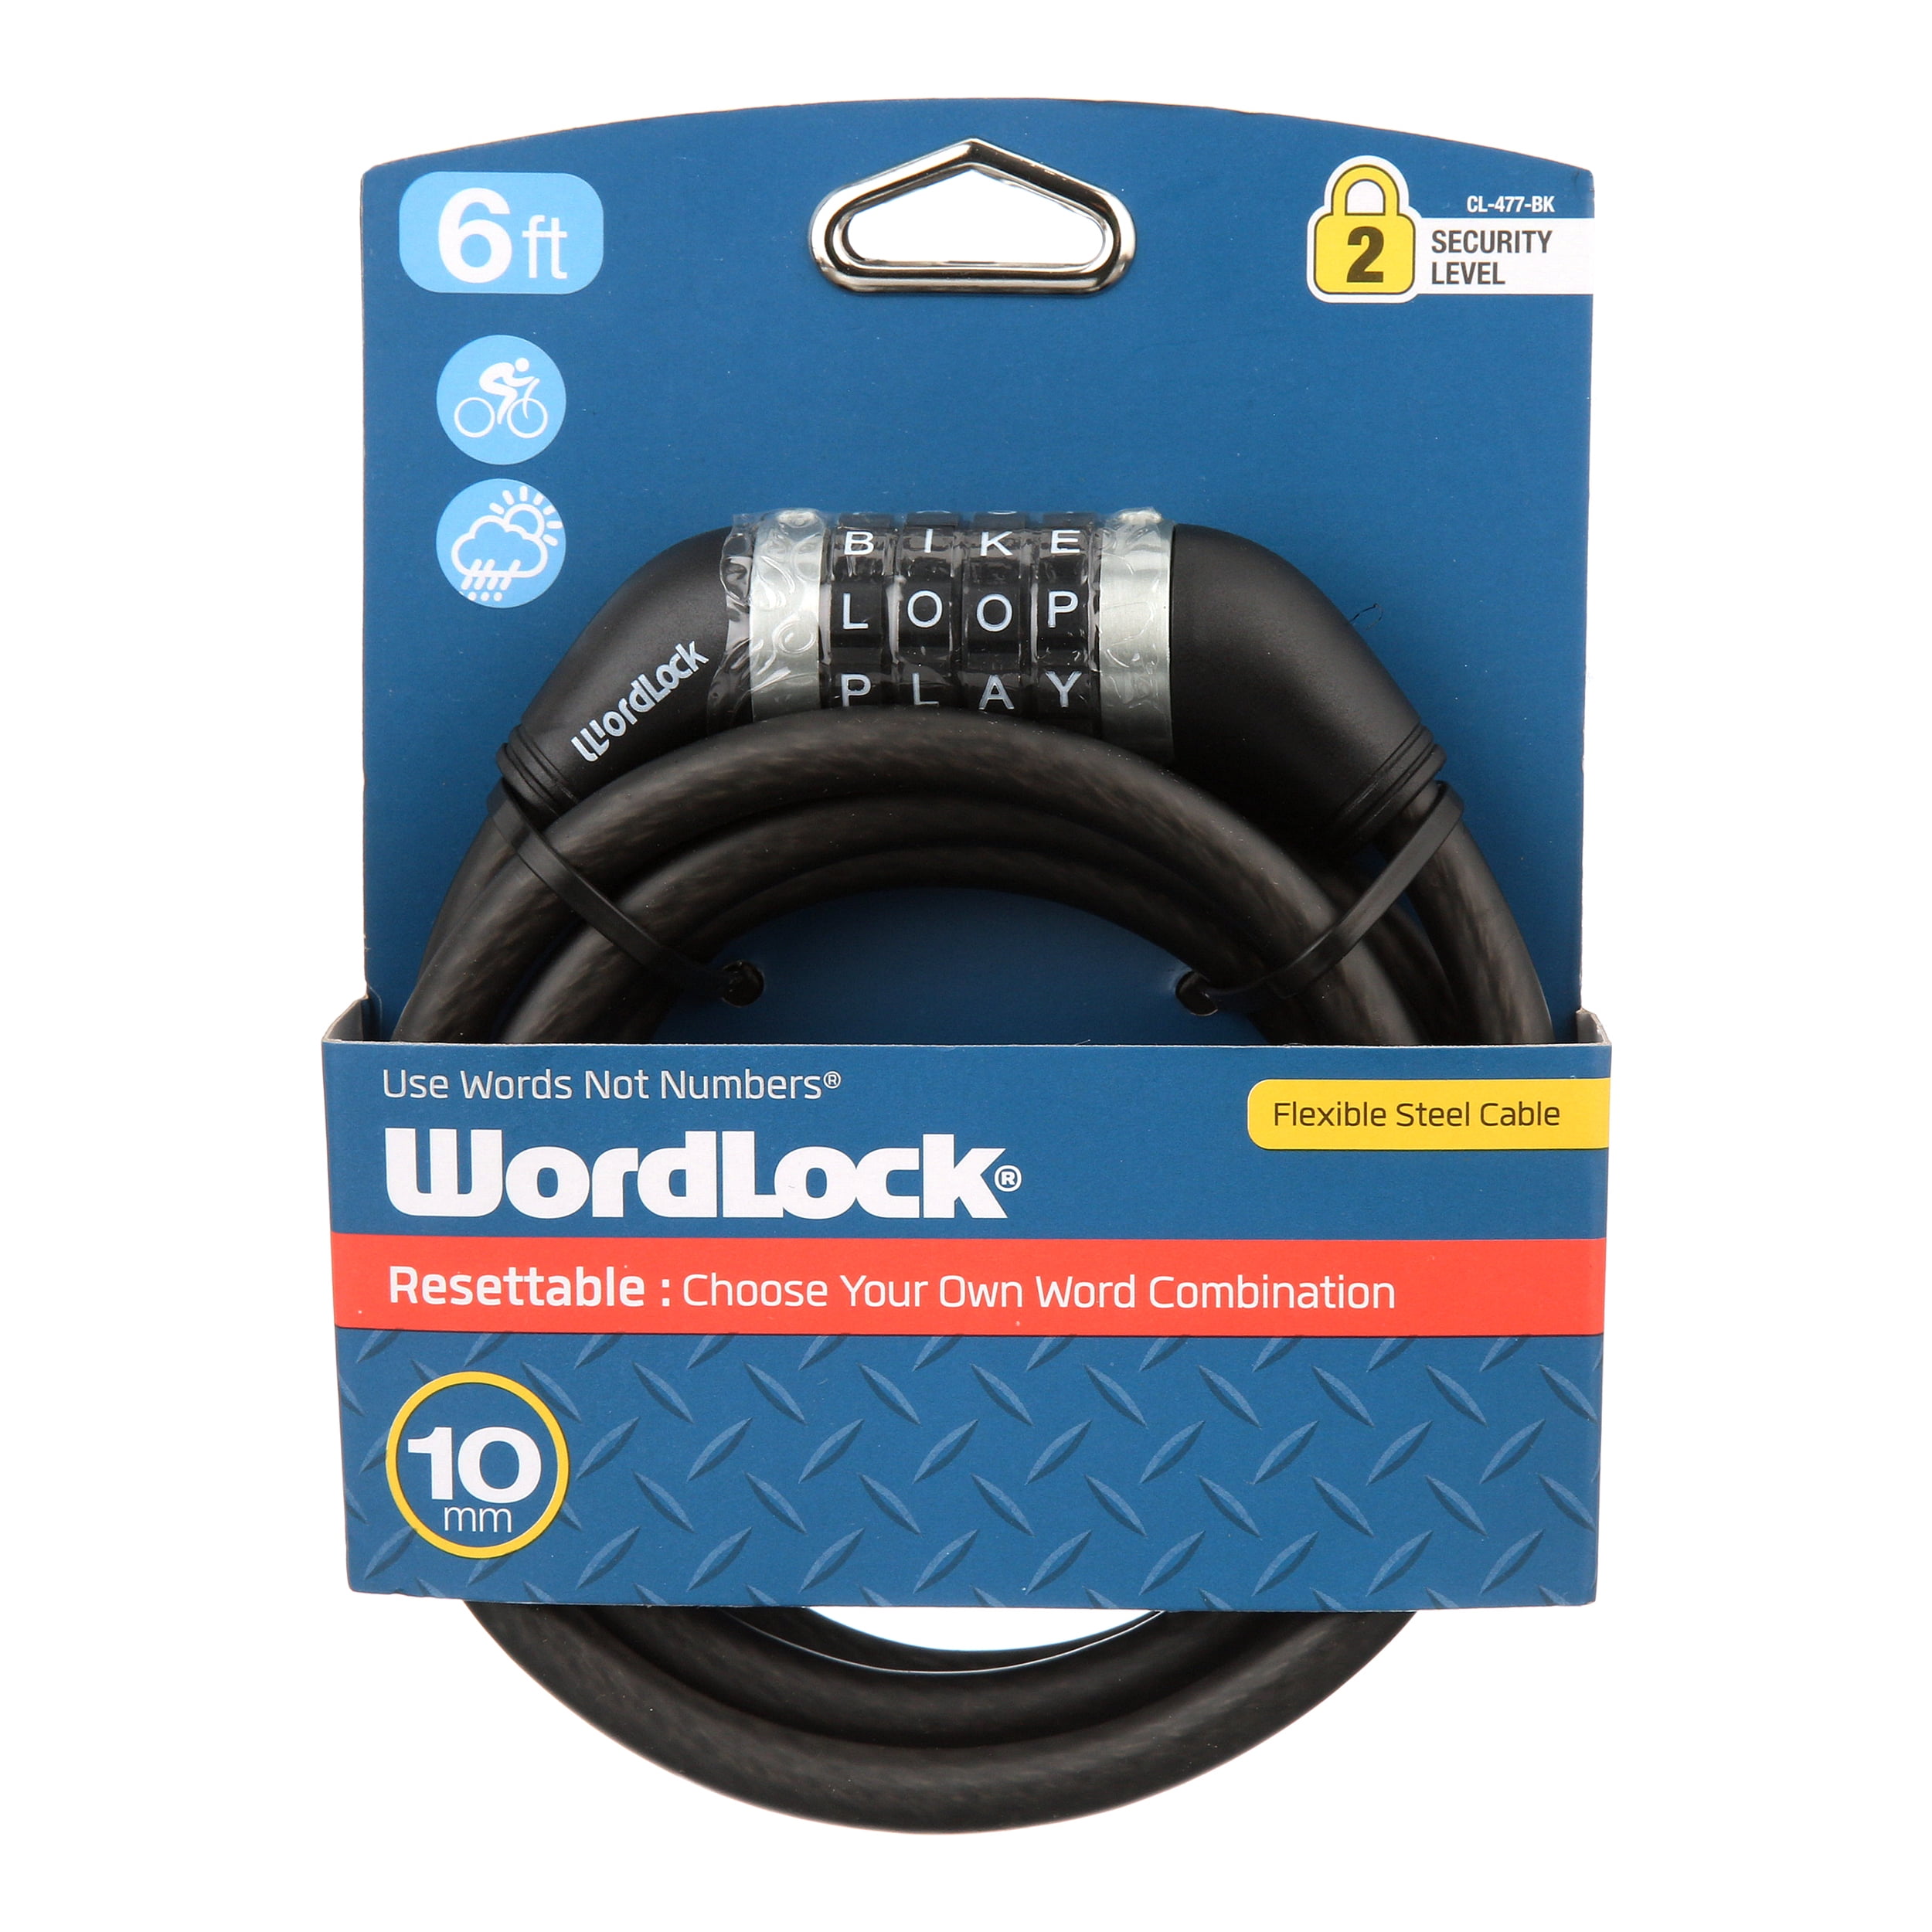 Wordlock Flexible Steel Cable Combination Word Lock Bike PadLock Bicycle Securit 